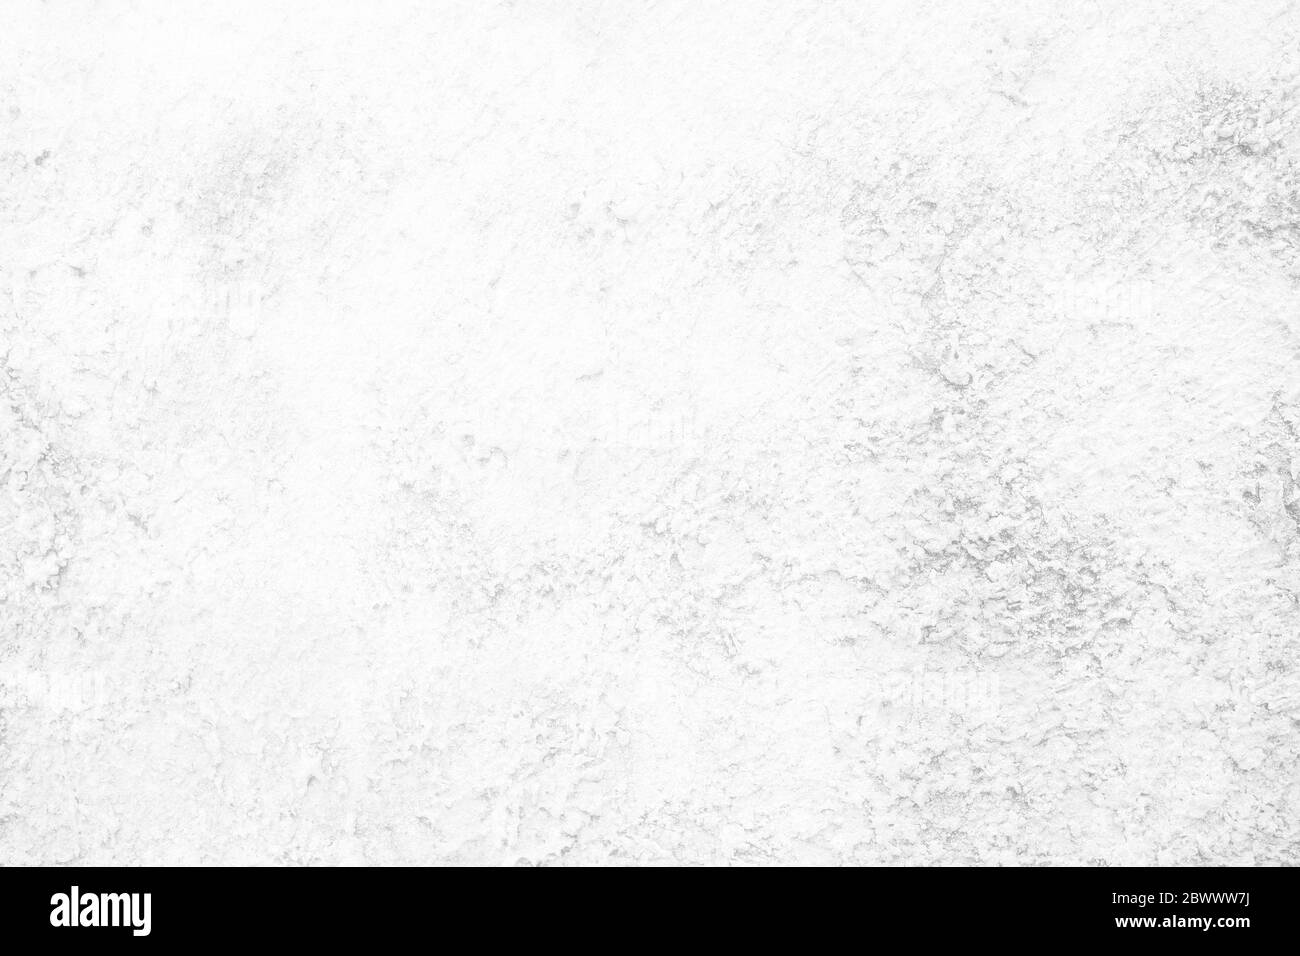 White Grunge Stucco Wall Texture Background. Stock Photo